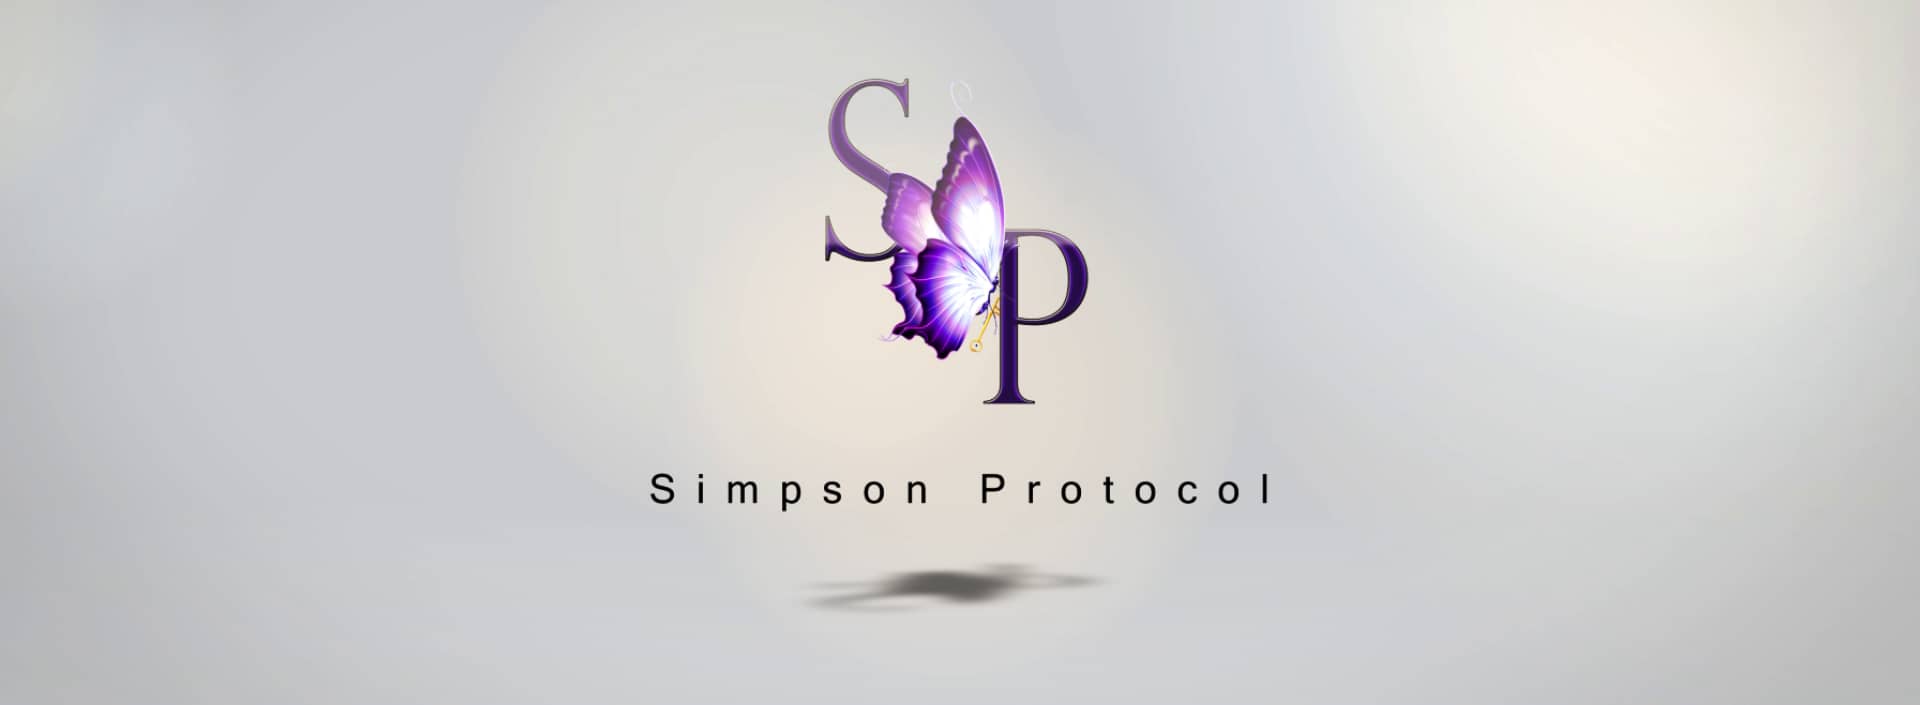 Protocole Simpson